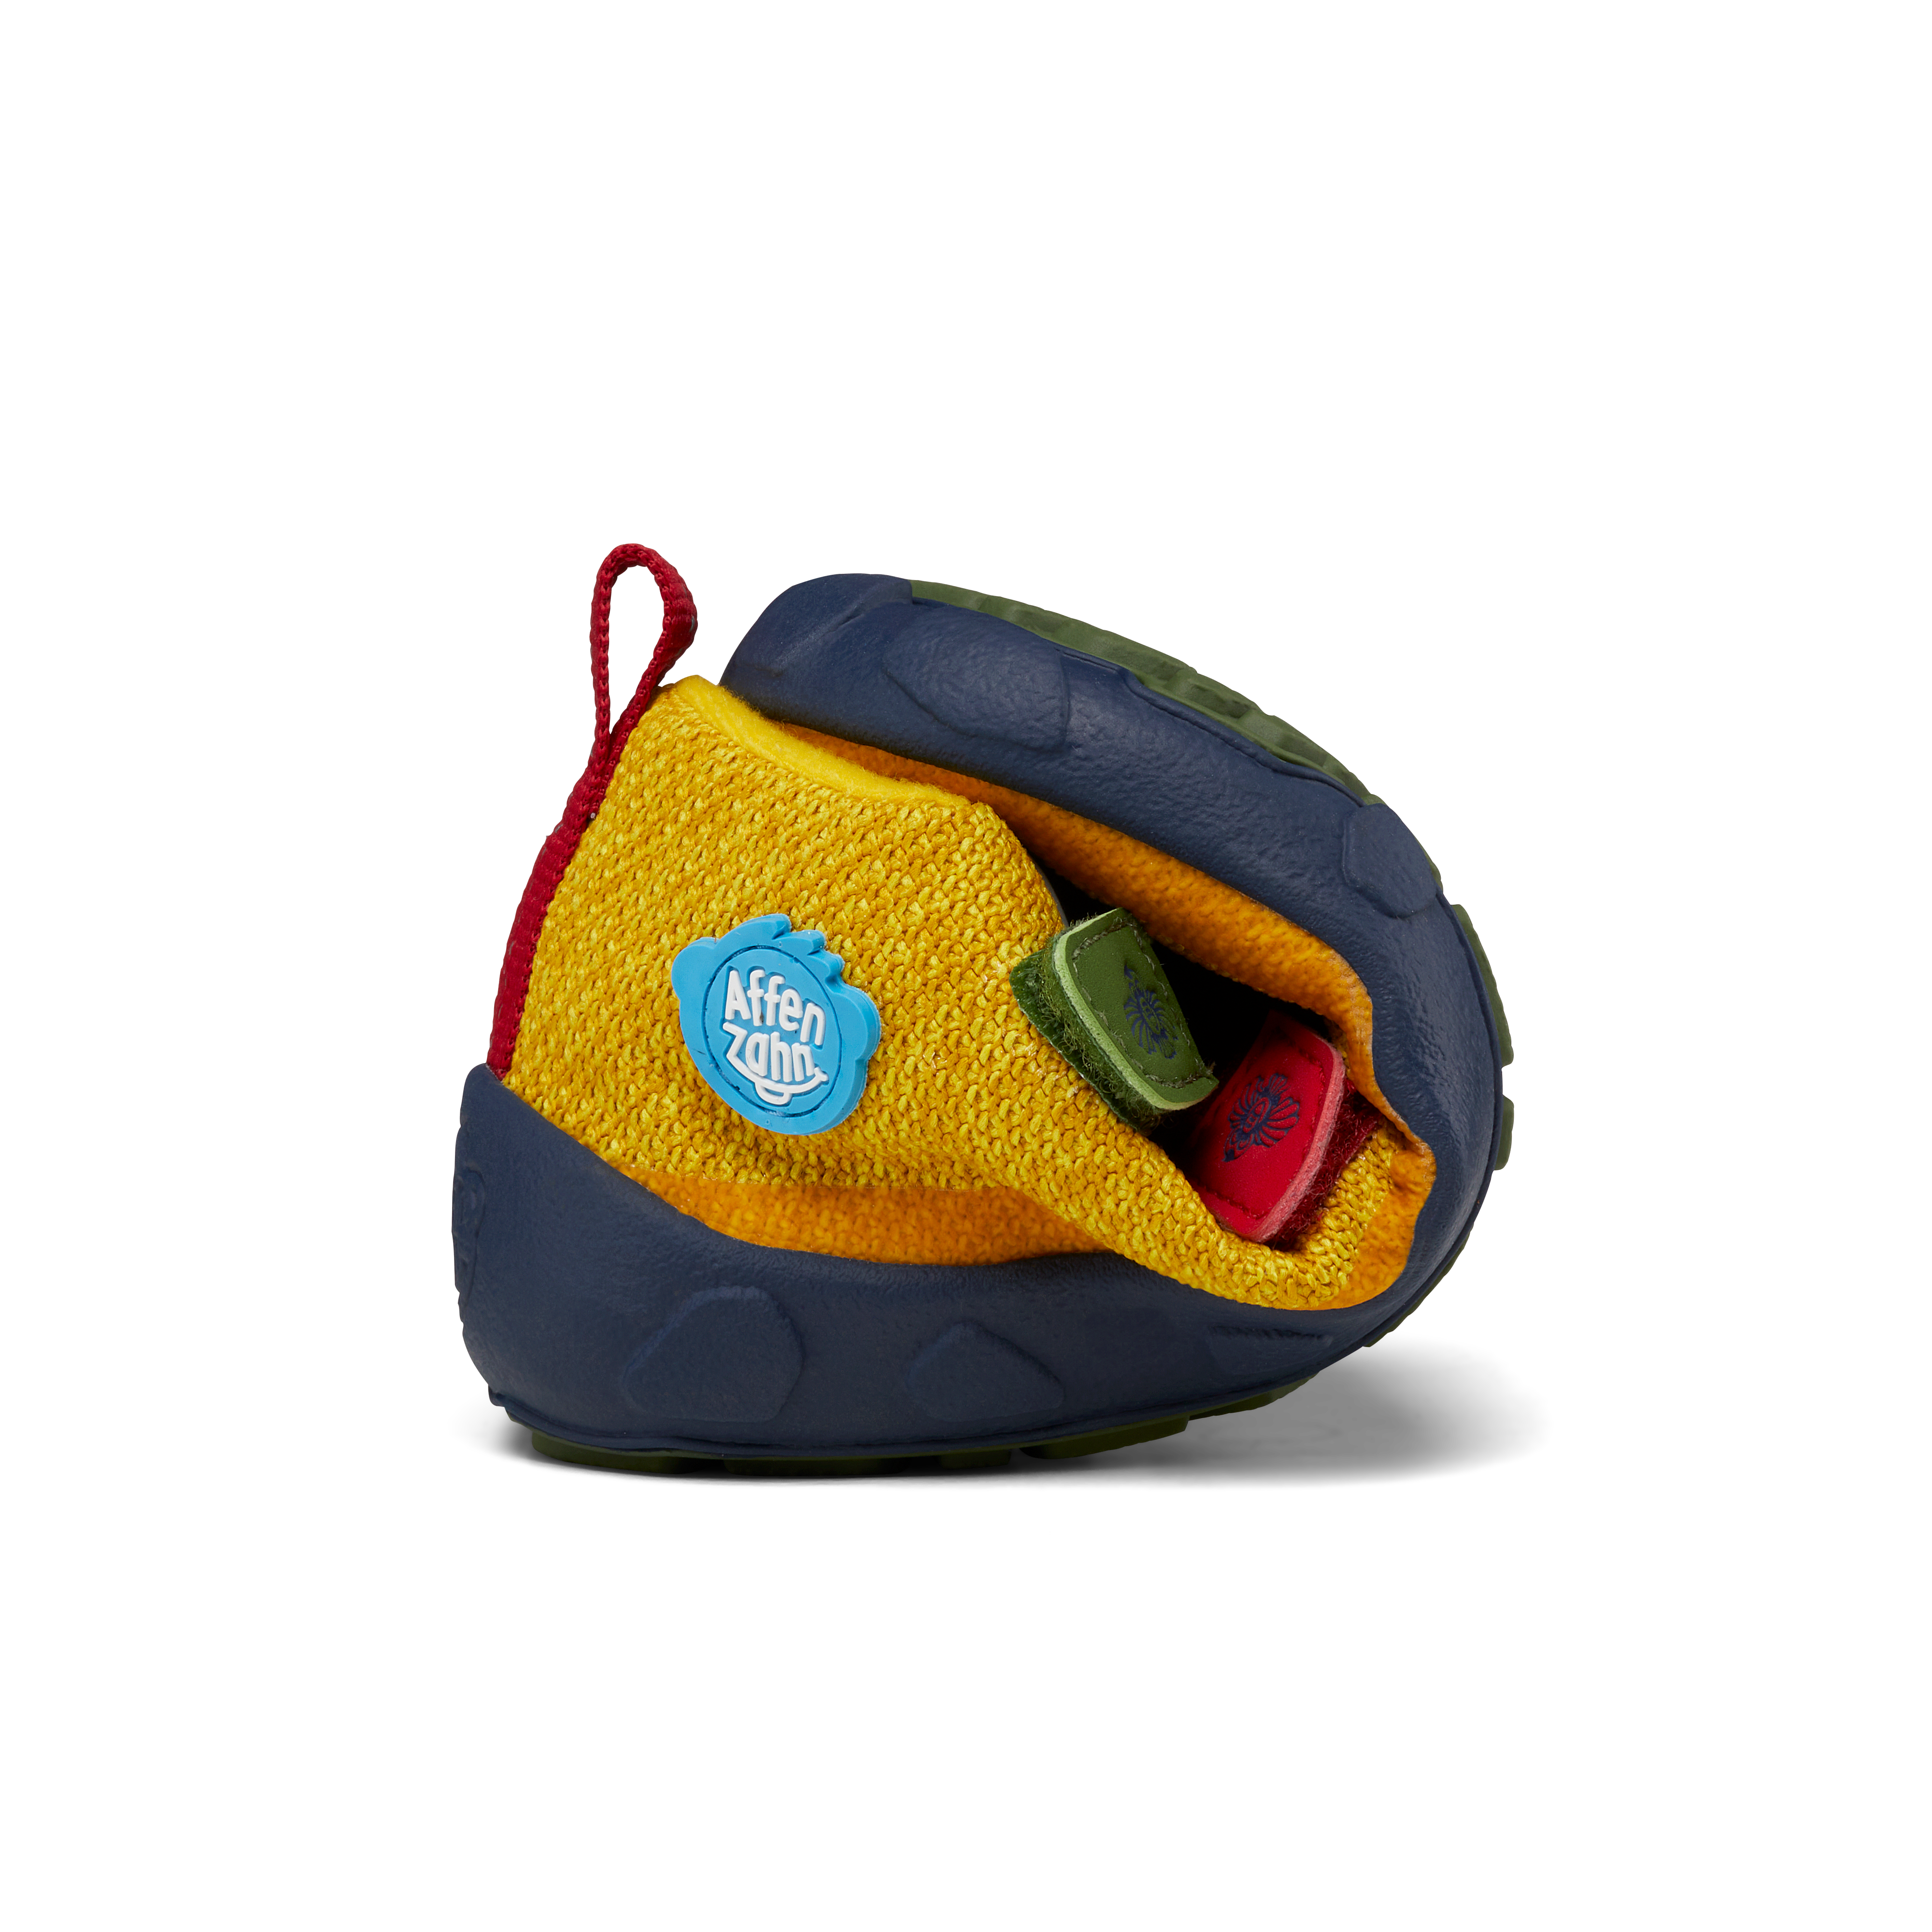 Affenzahn Low Boot Knit Happy barfods overgangssko til børn i farven toucan, rullet